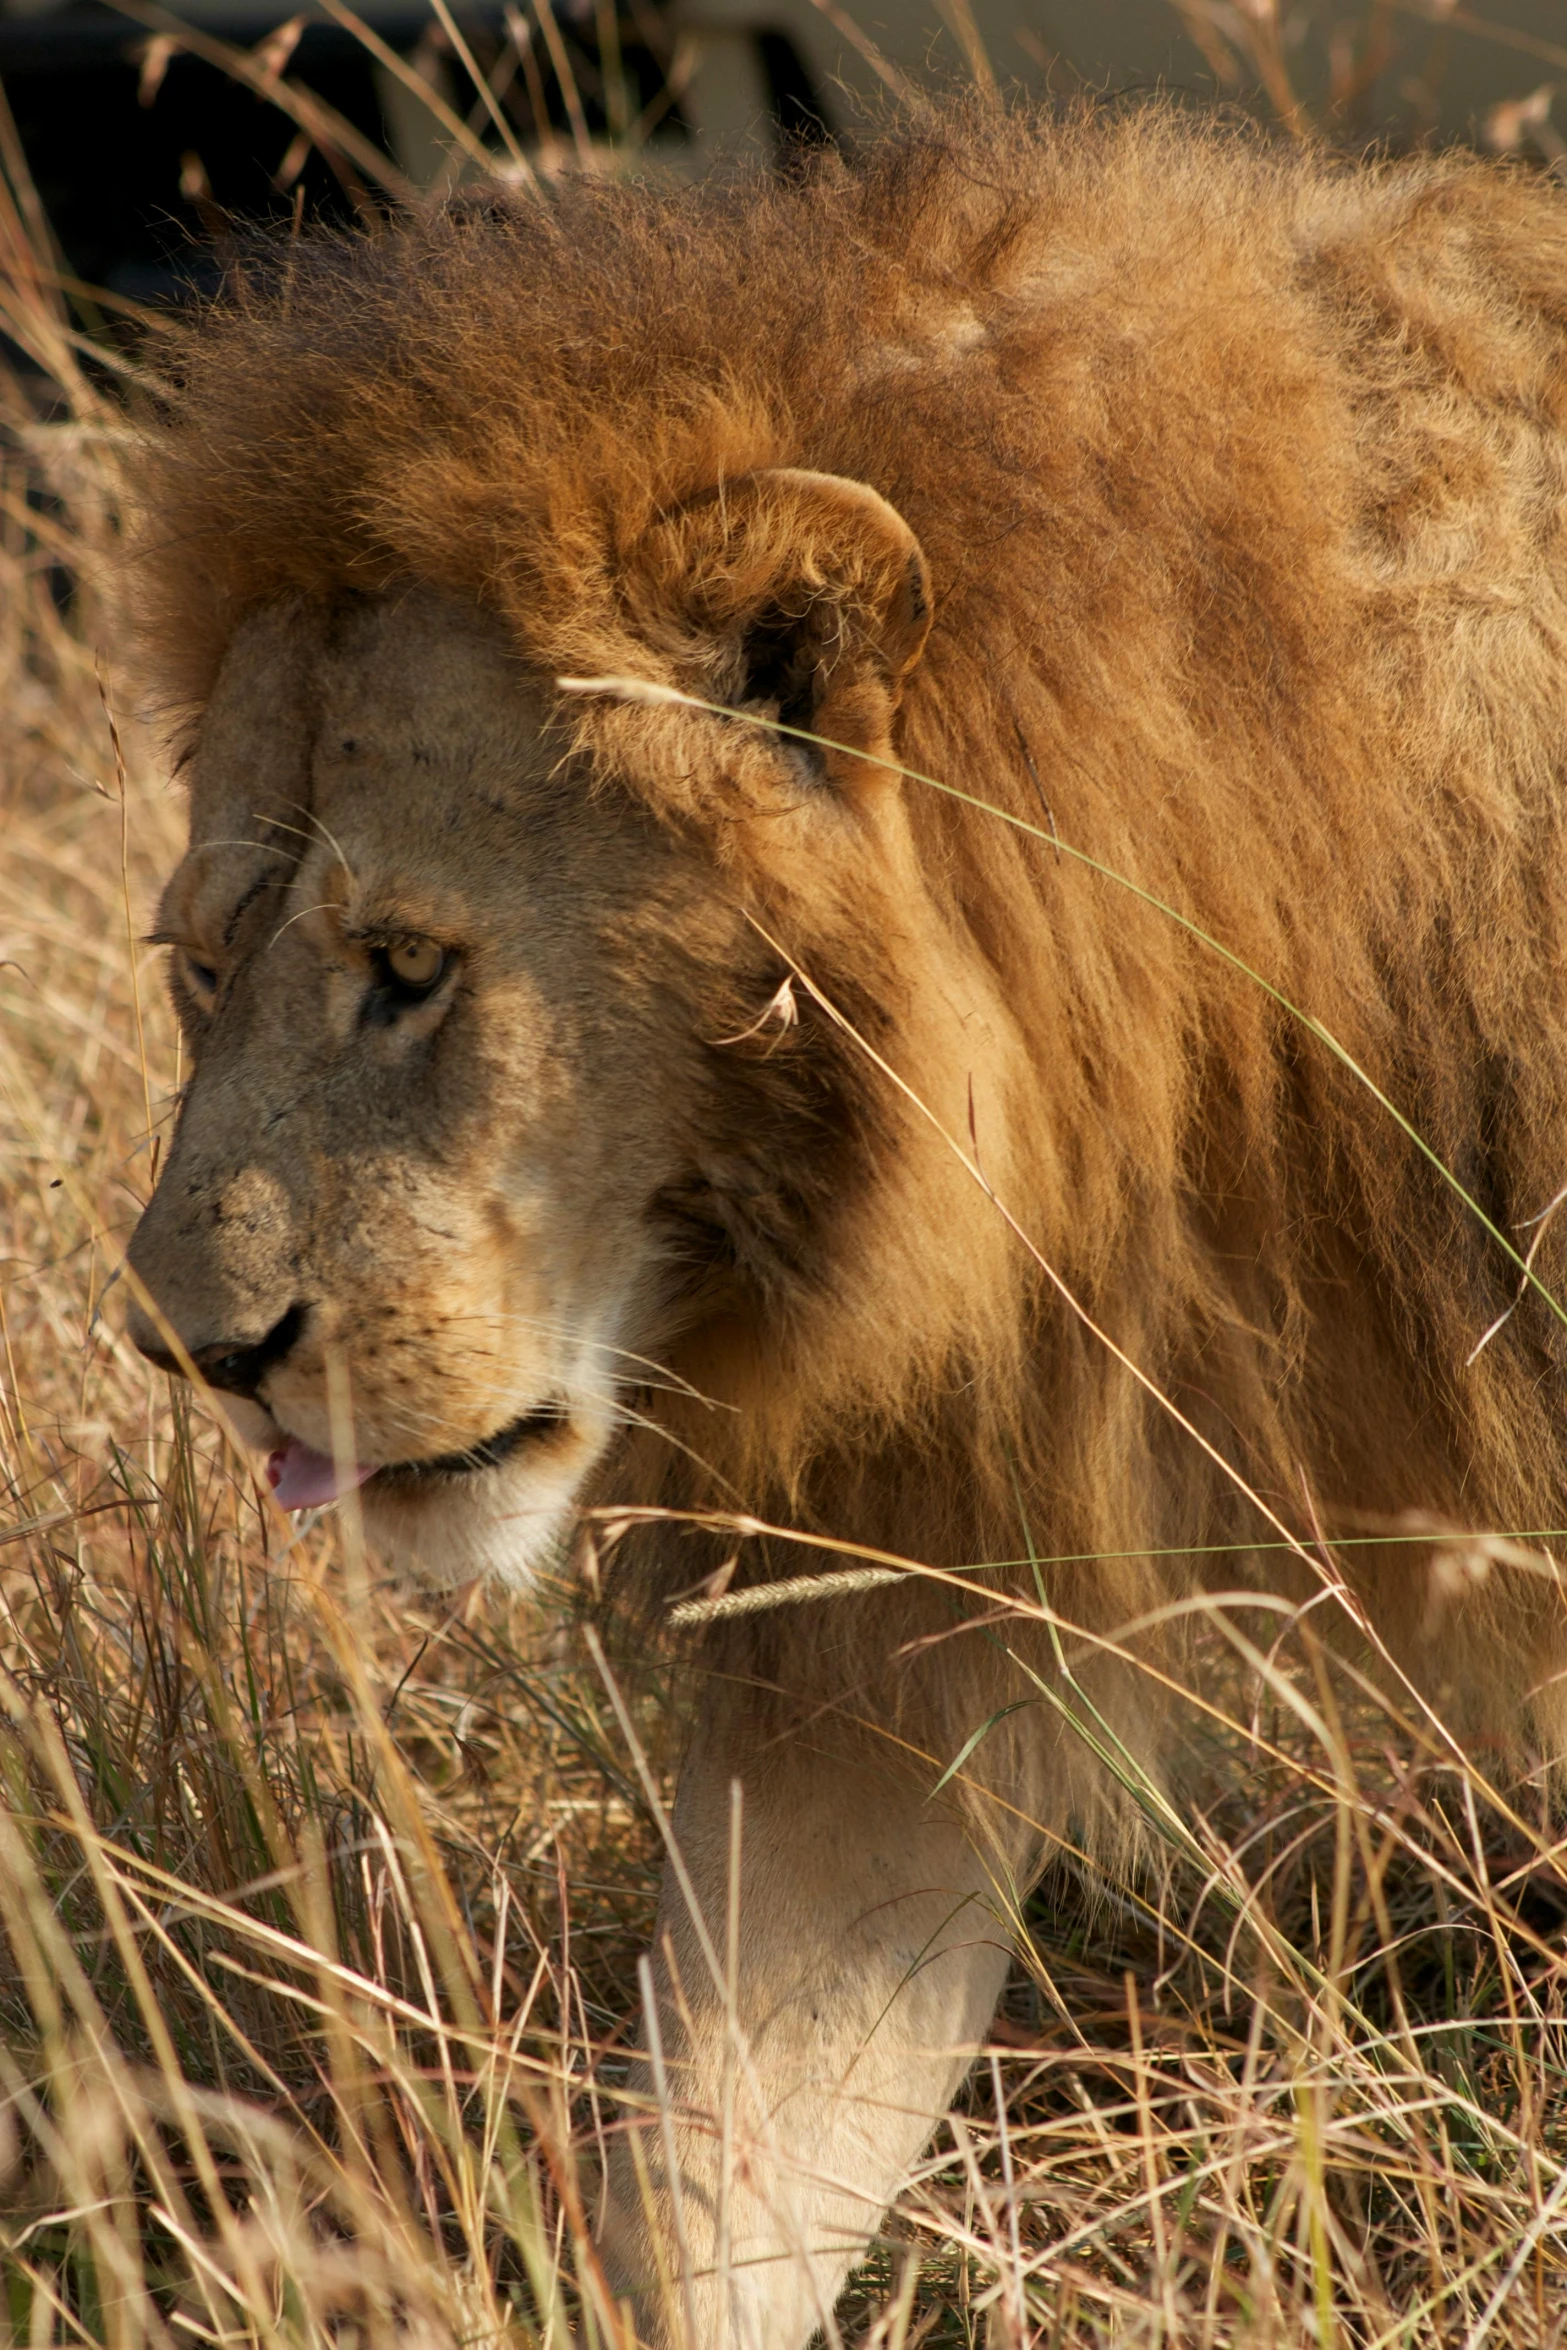 a male lion walking through a dry grass field